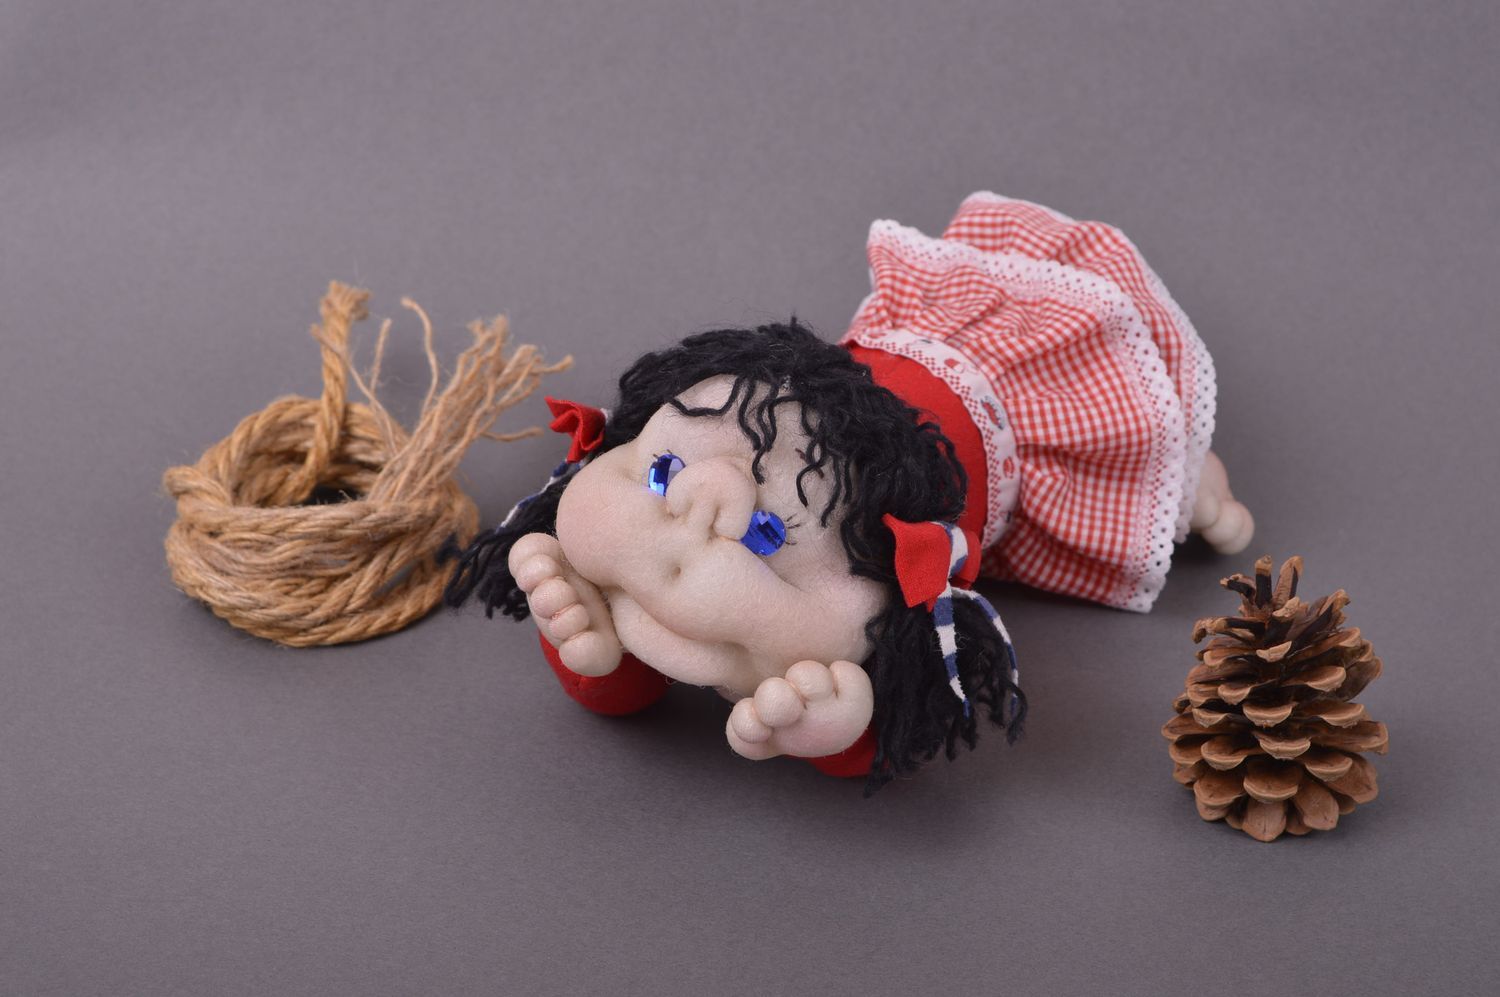 Muñeco artesanal juguete original elemento decorativo caperucita roja acostada foto 1